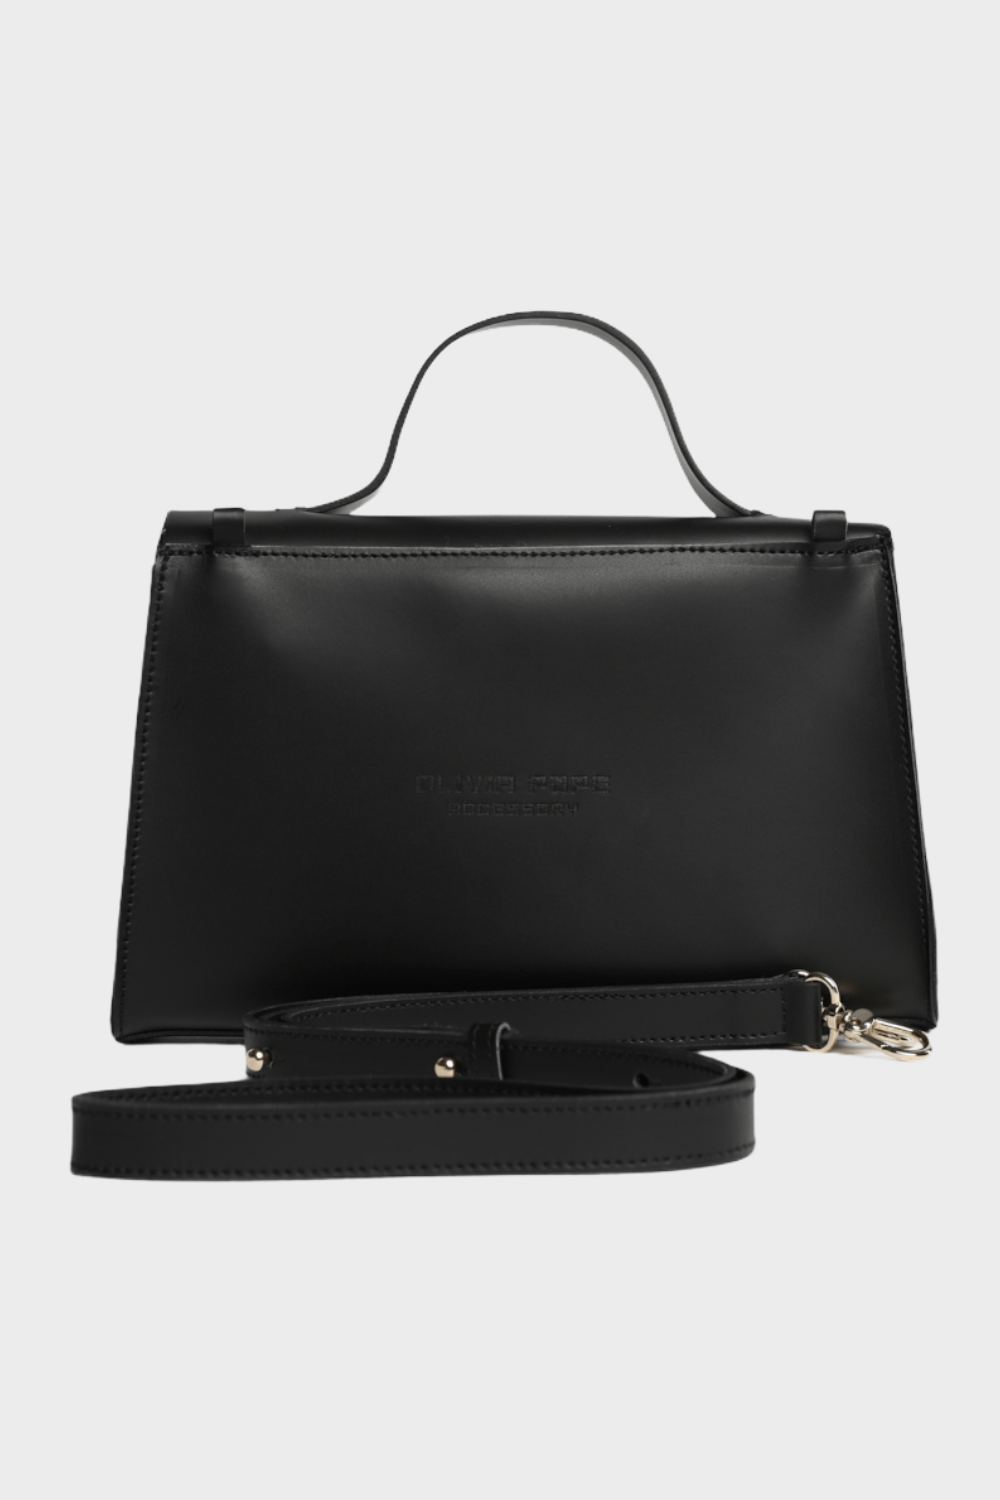 Olivia Pope Accessory BAGS Capri Studded Flap Leather Multi-function Mini Bag